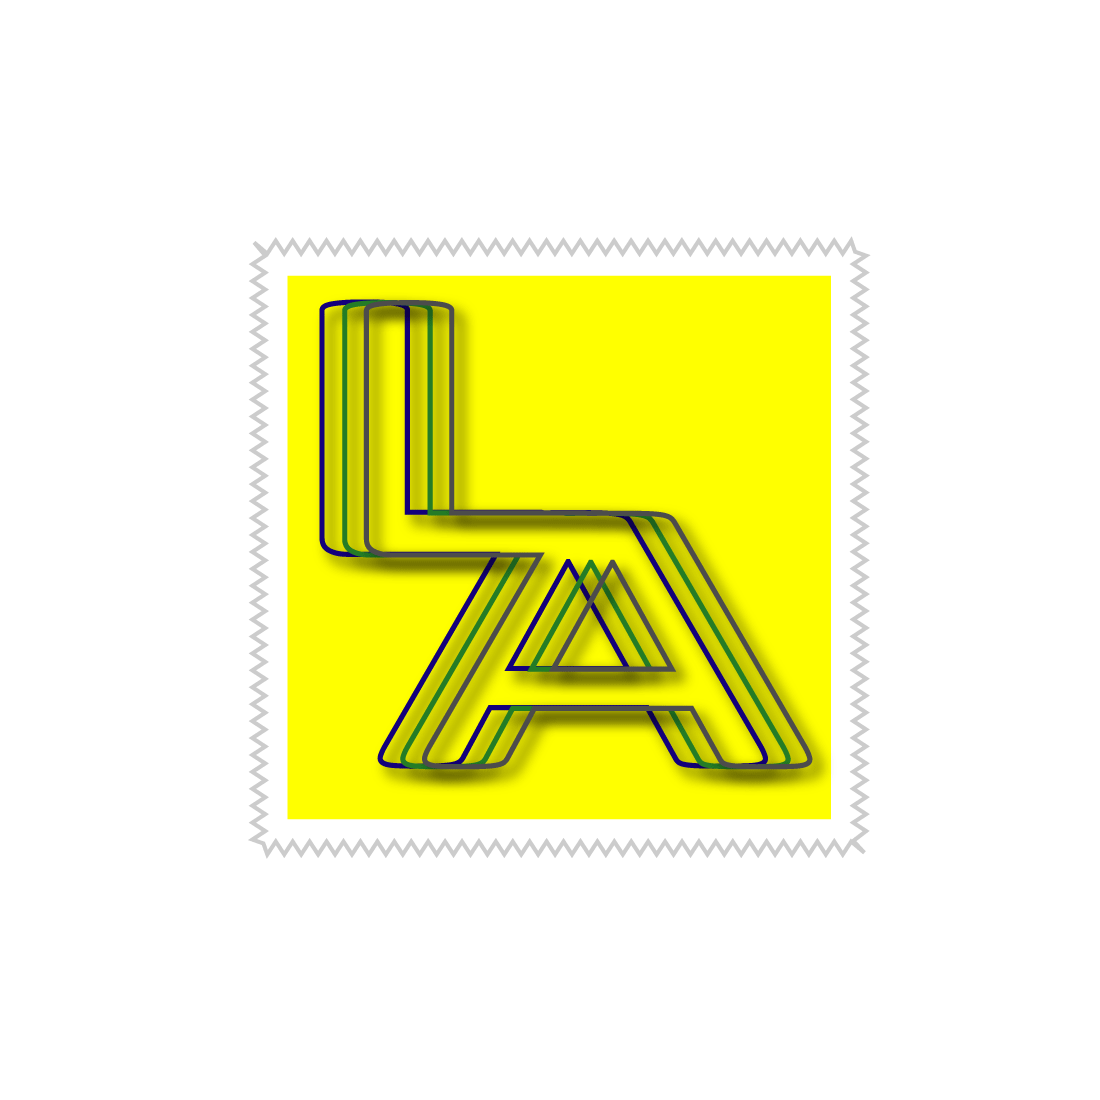 LA STAMP - Icon preview image.